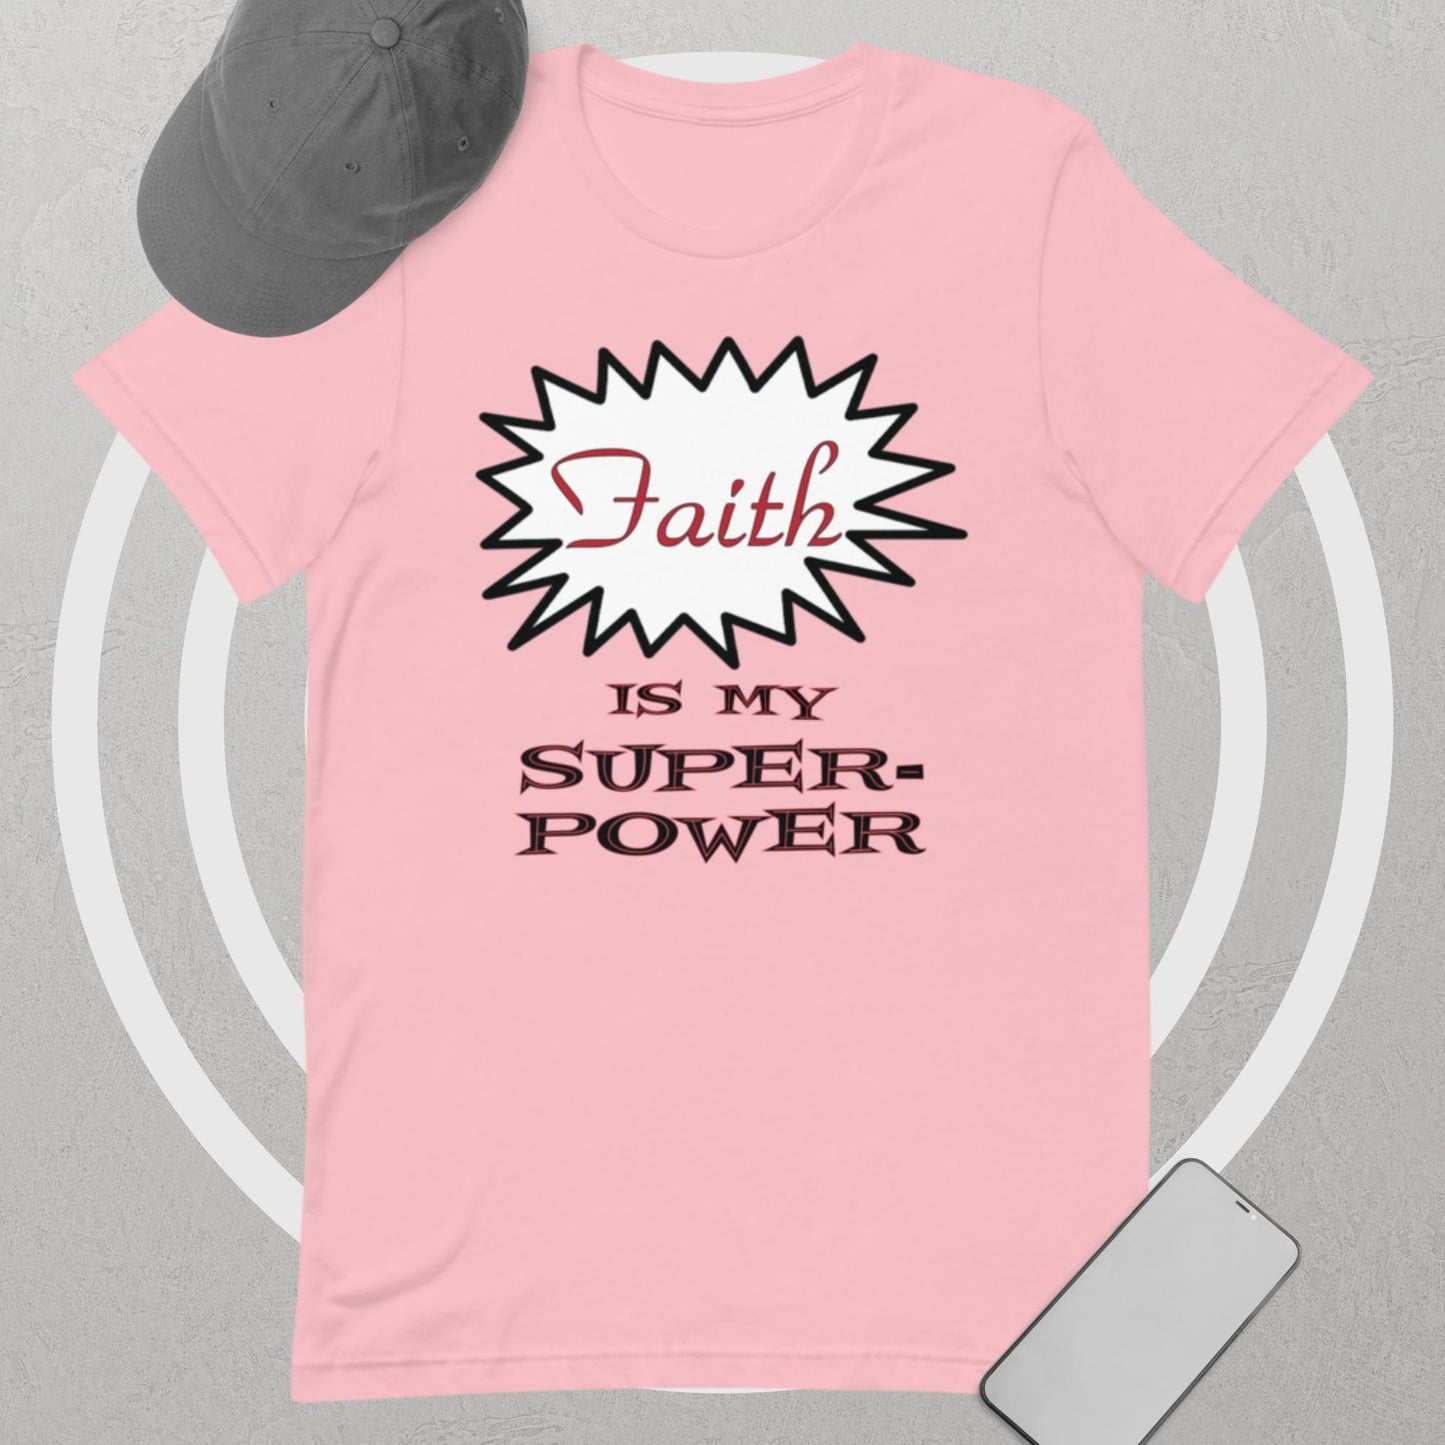 Faith is My Superpower t-shirt